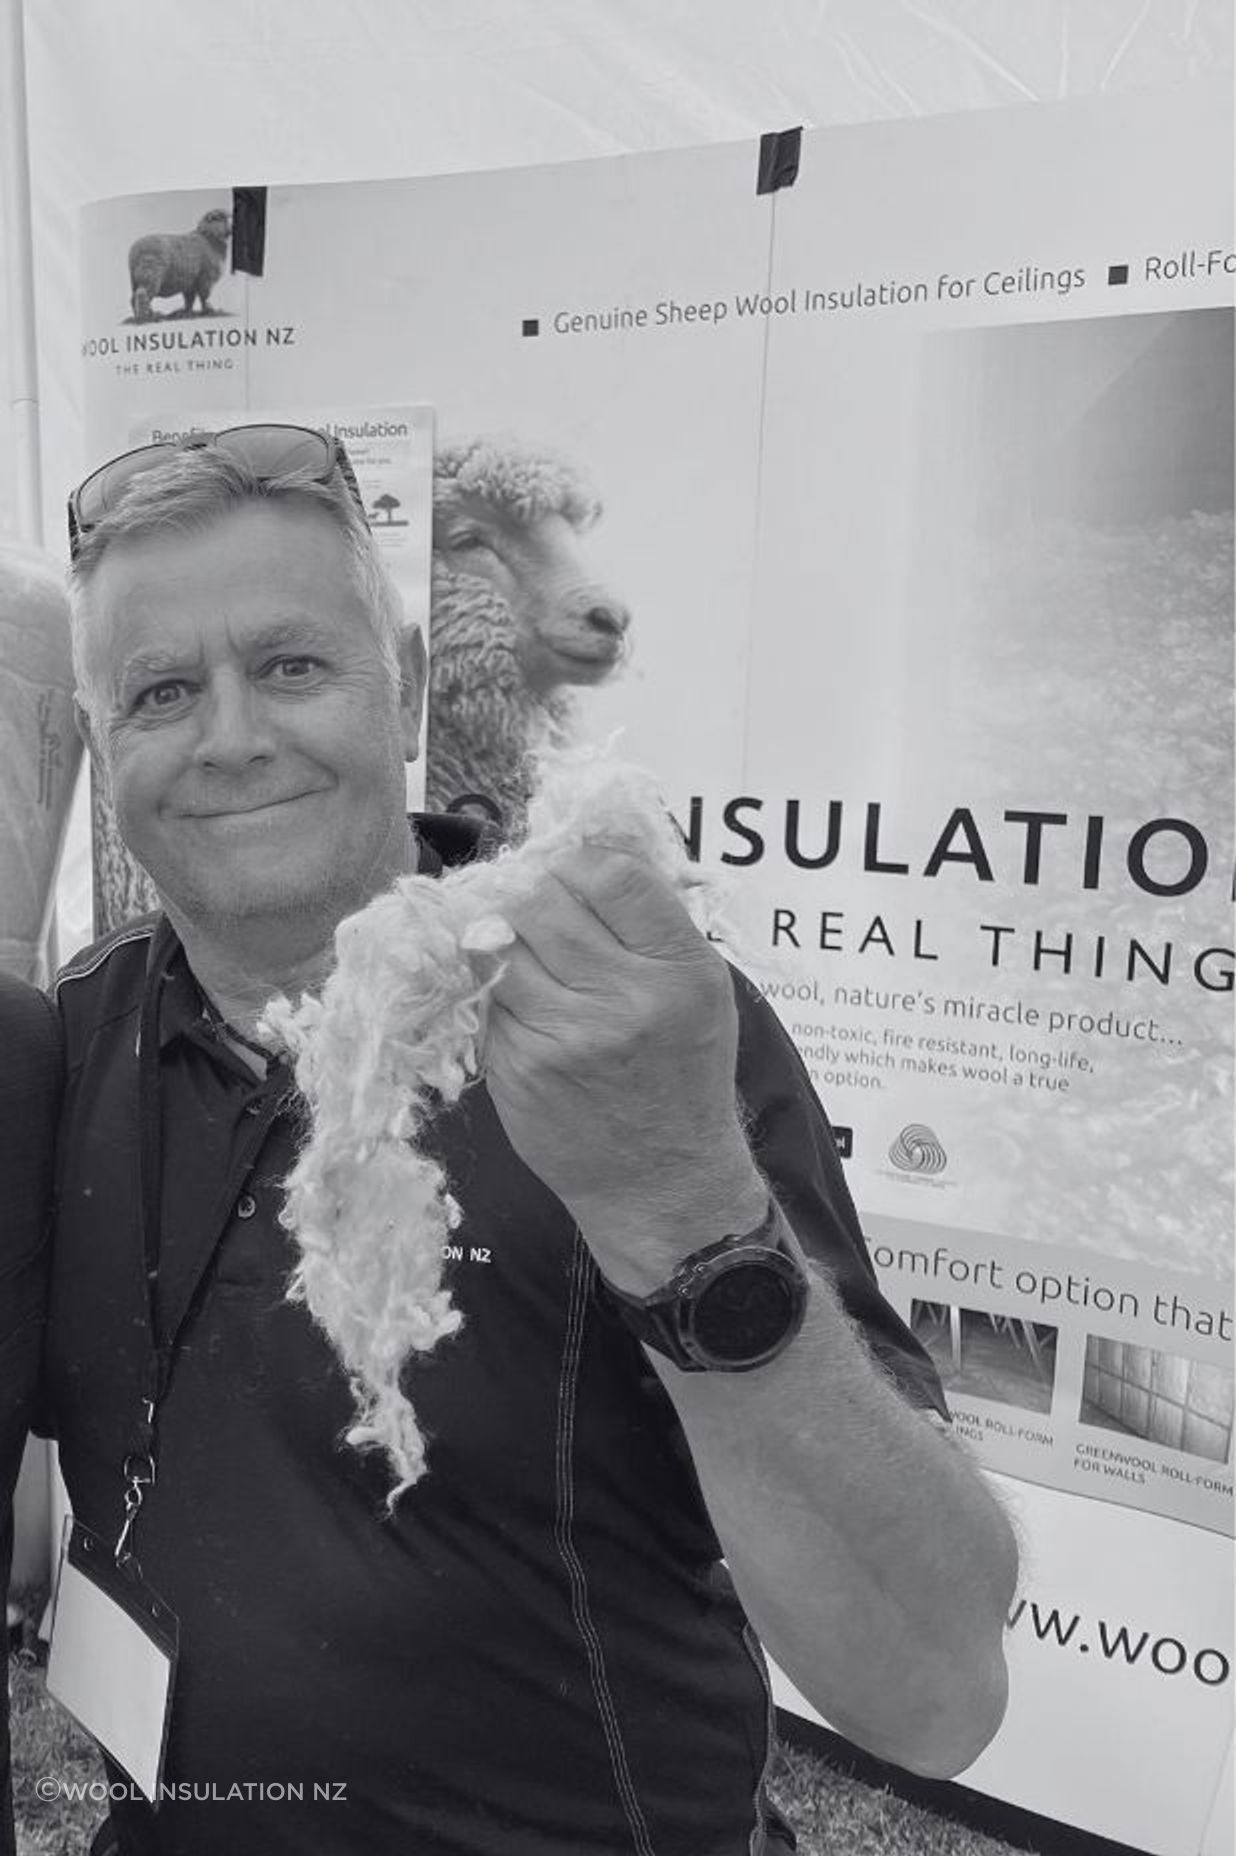 Richard Bennett of Wool Insulation